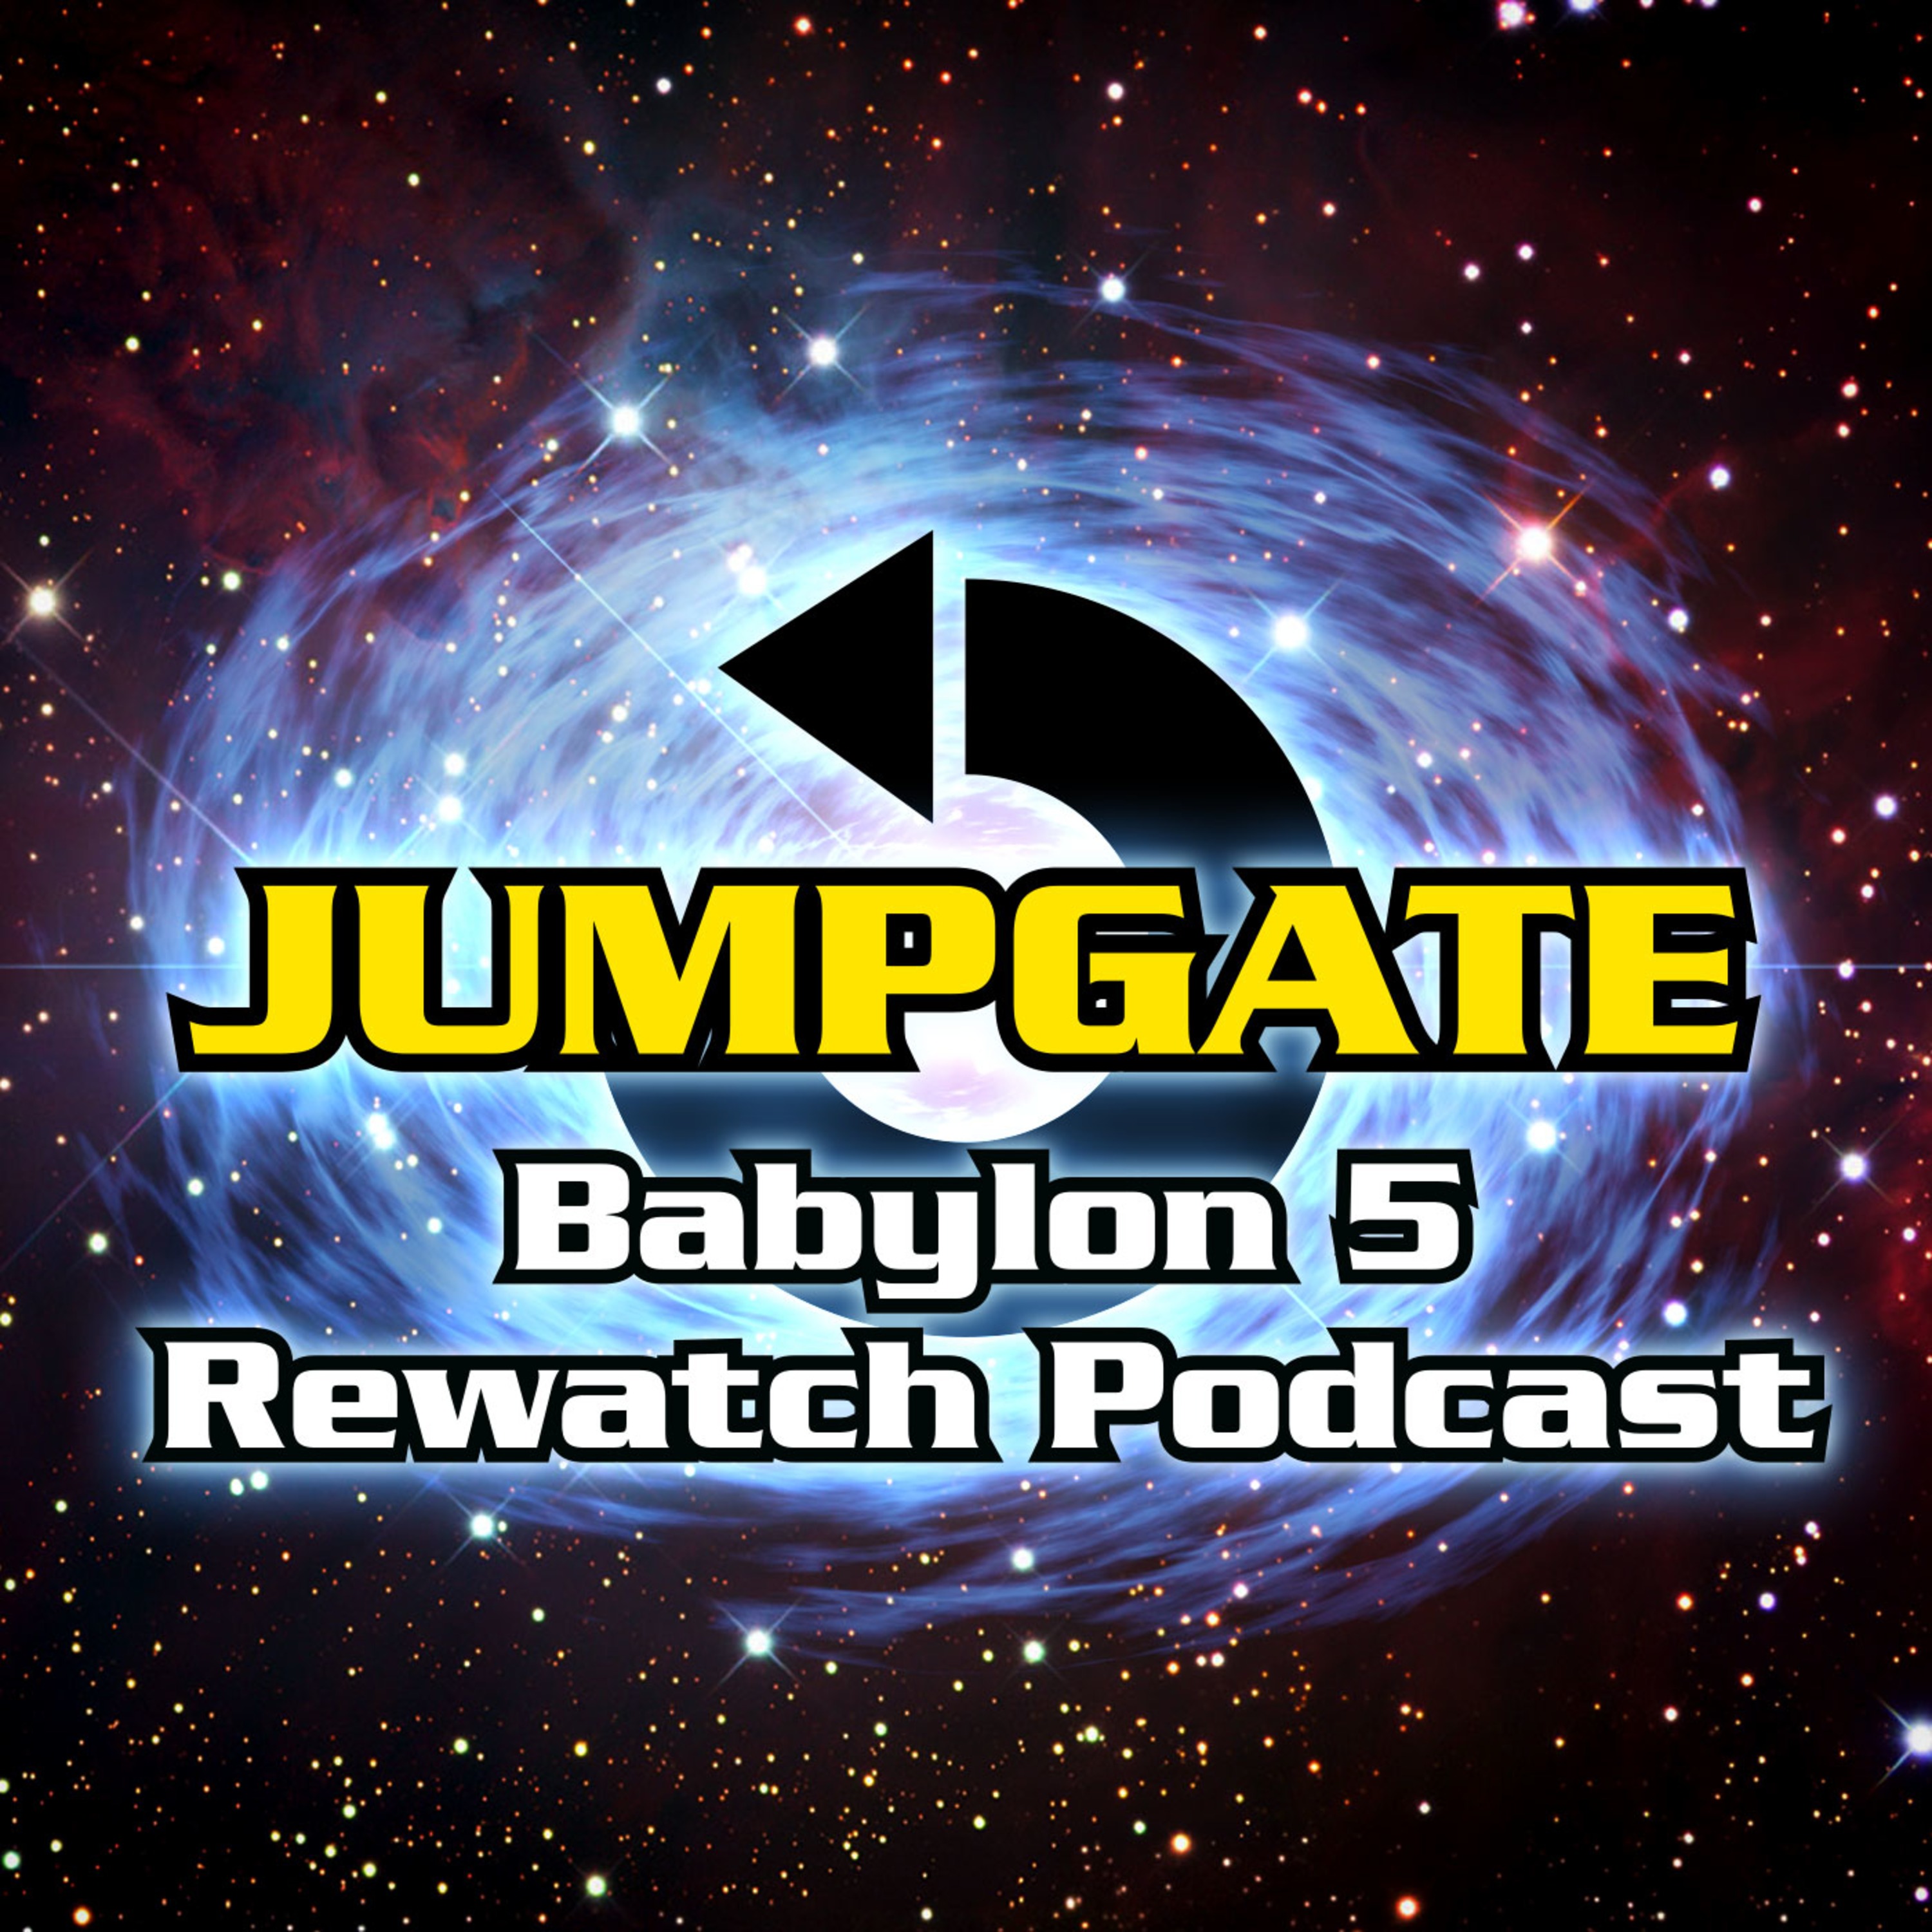 Jumpgate: The Babylon 5 Re-Watch Podcast